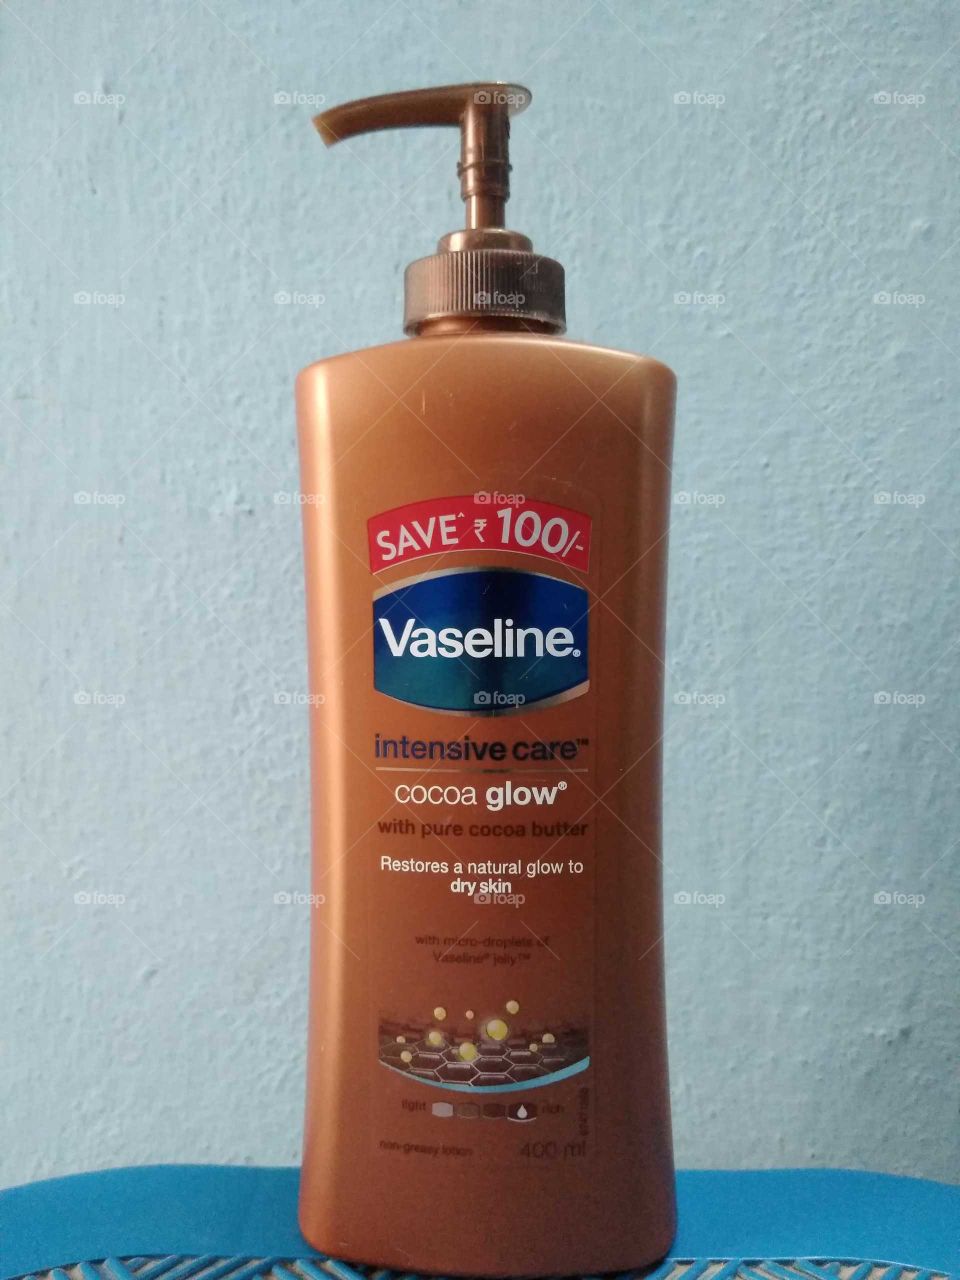 Vaseline cocoa glow body lotion